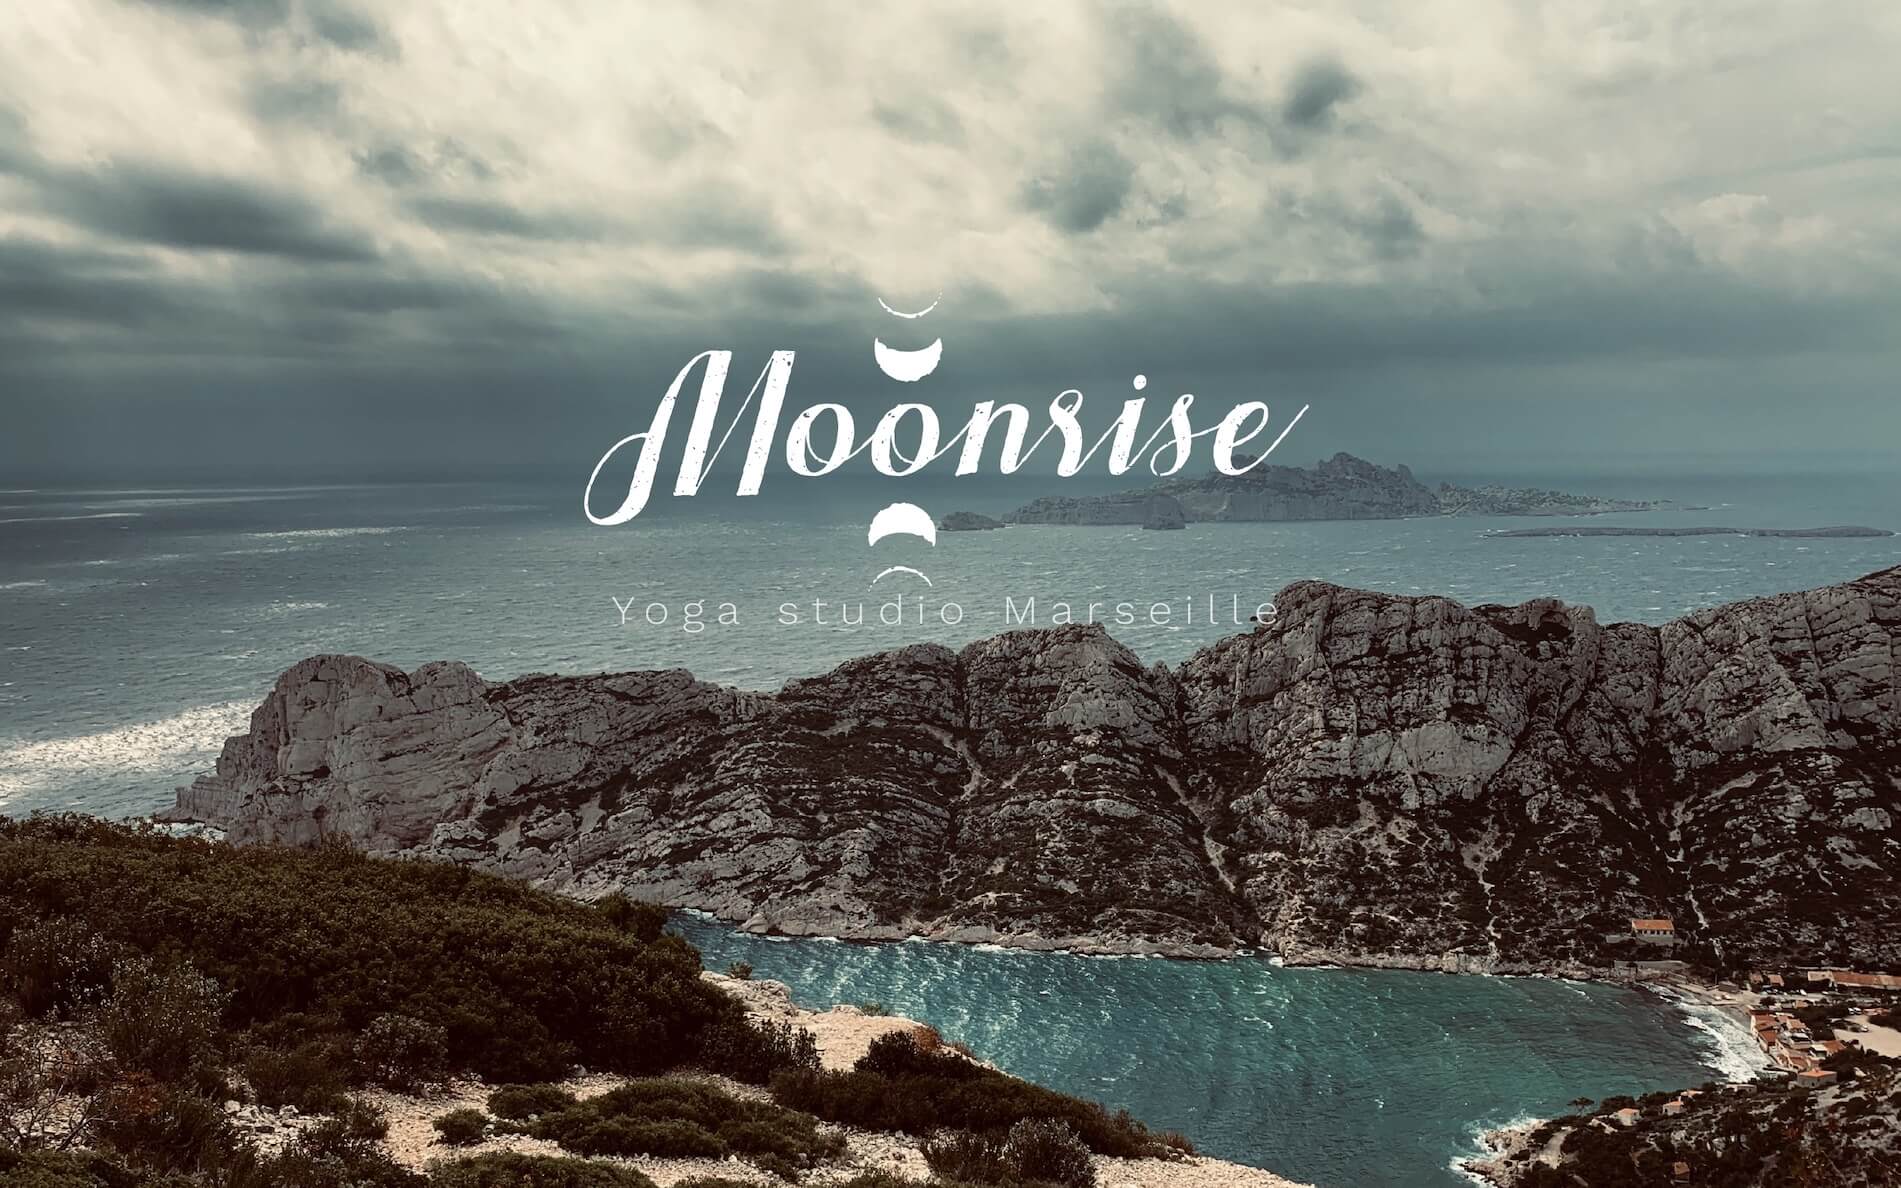 Moonrise Yoga Studio Marseille - Yogadvisor